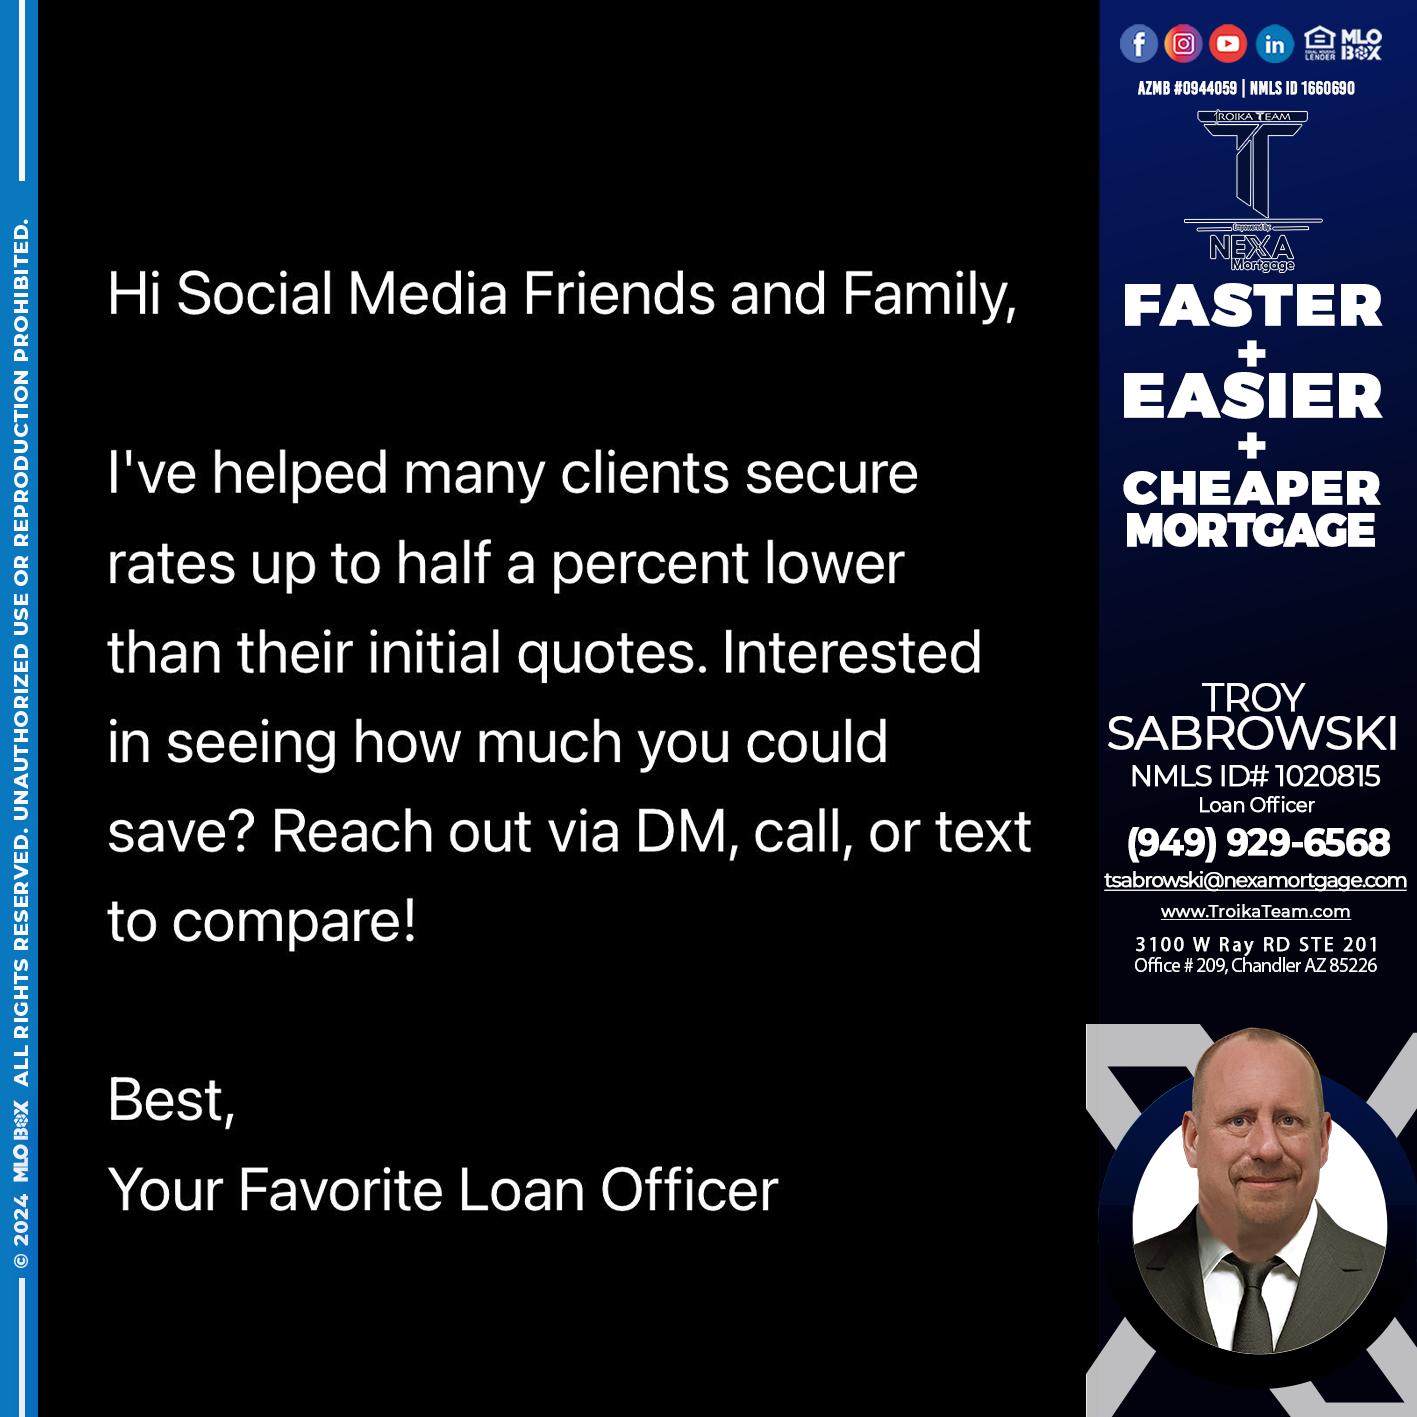 SOCIAL MEDIA - Troy Sabrowski -Loan Officer